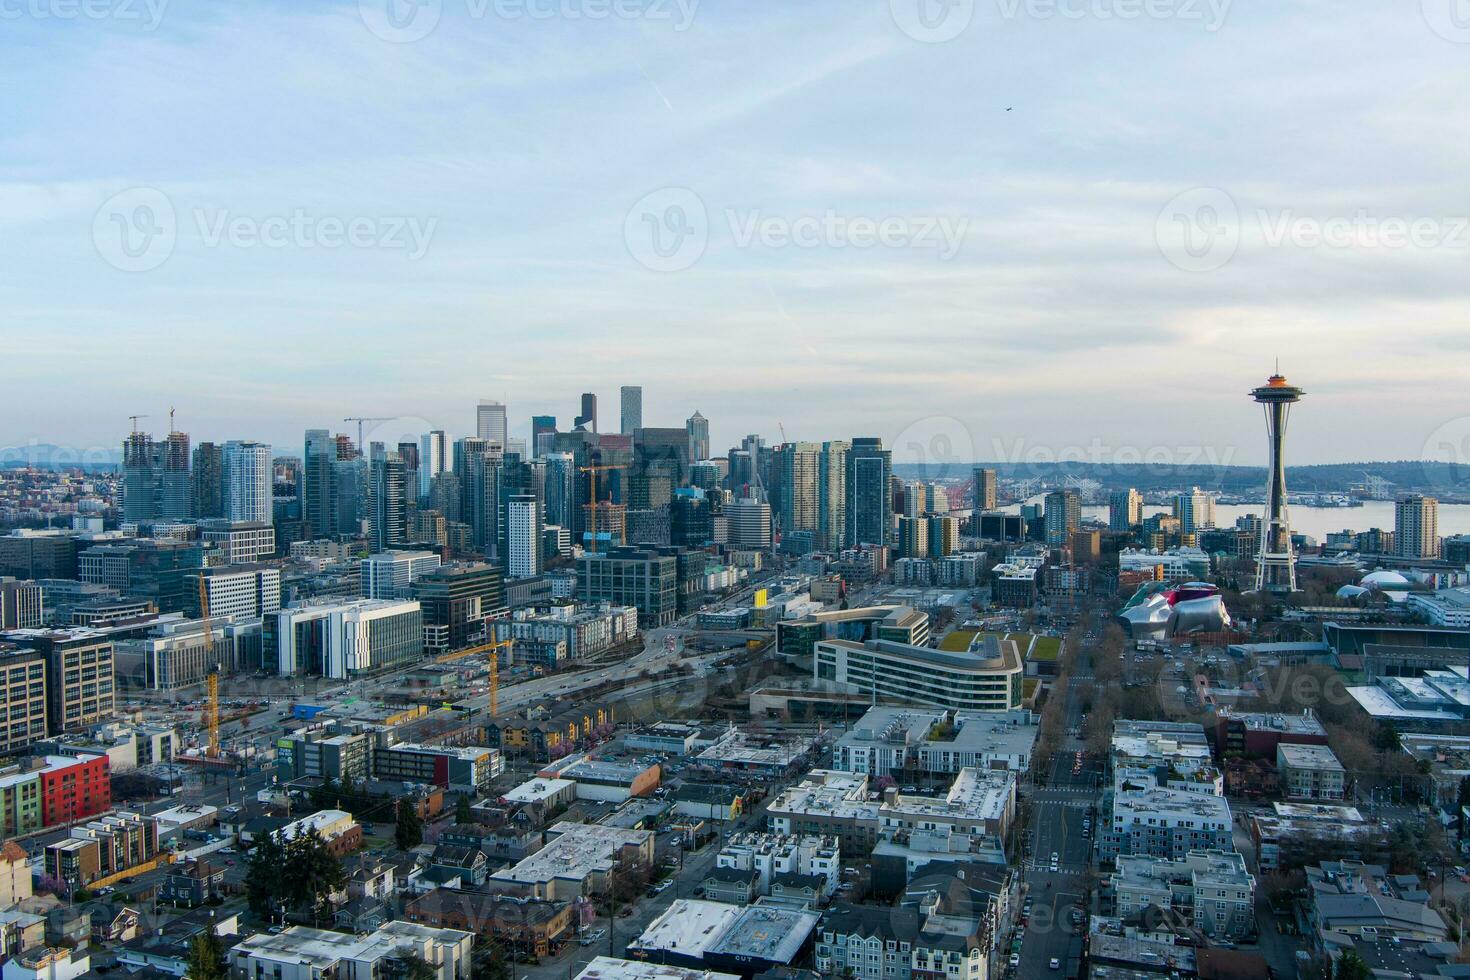 Seattle, Washington Horizont beim Sonnenuntergang foto